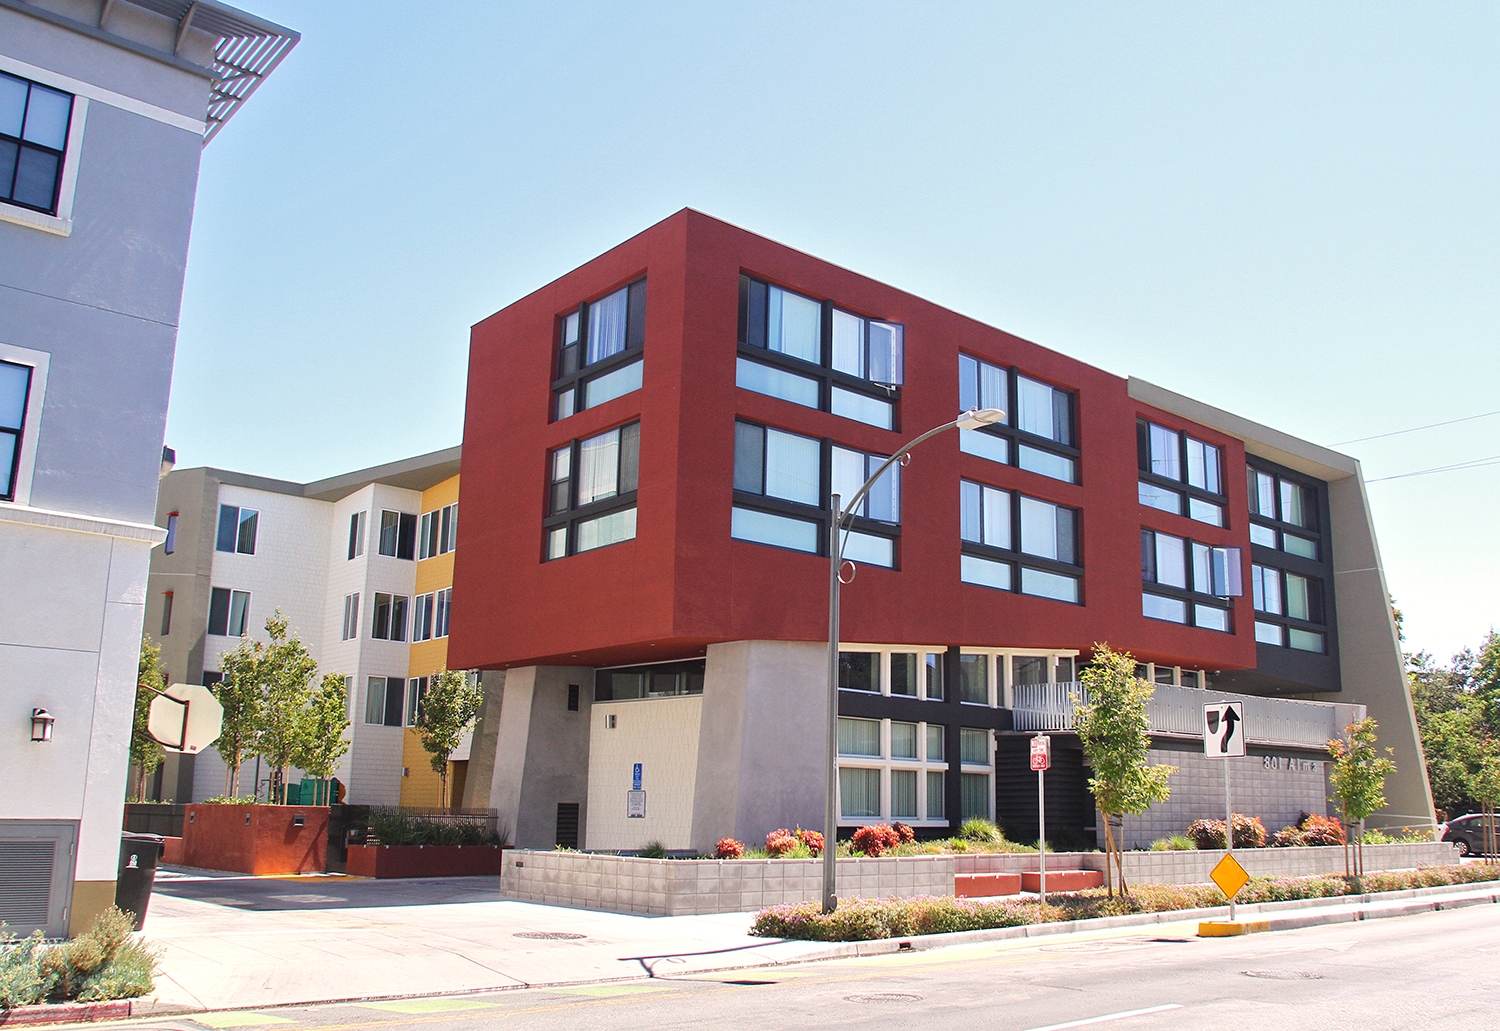 News: Palo Alto explores new policies to help tenants